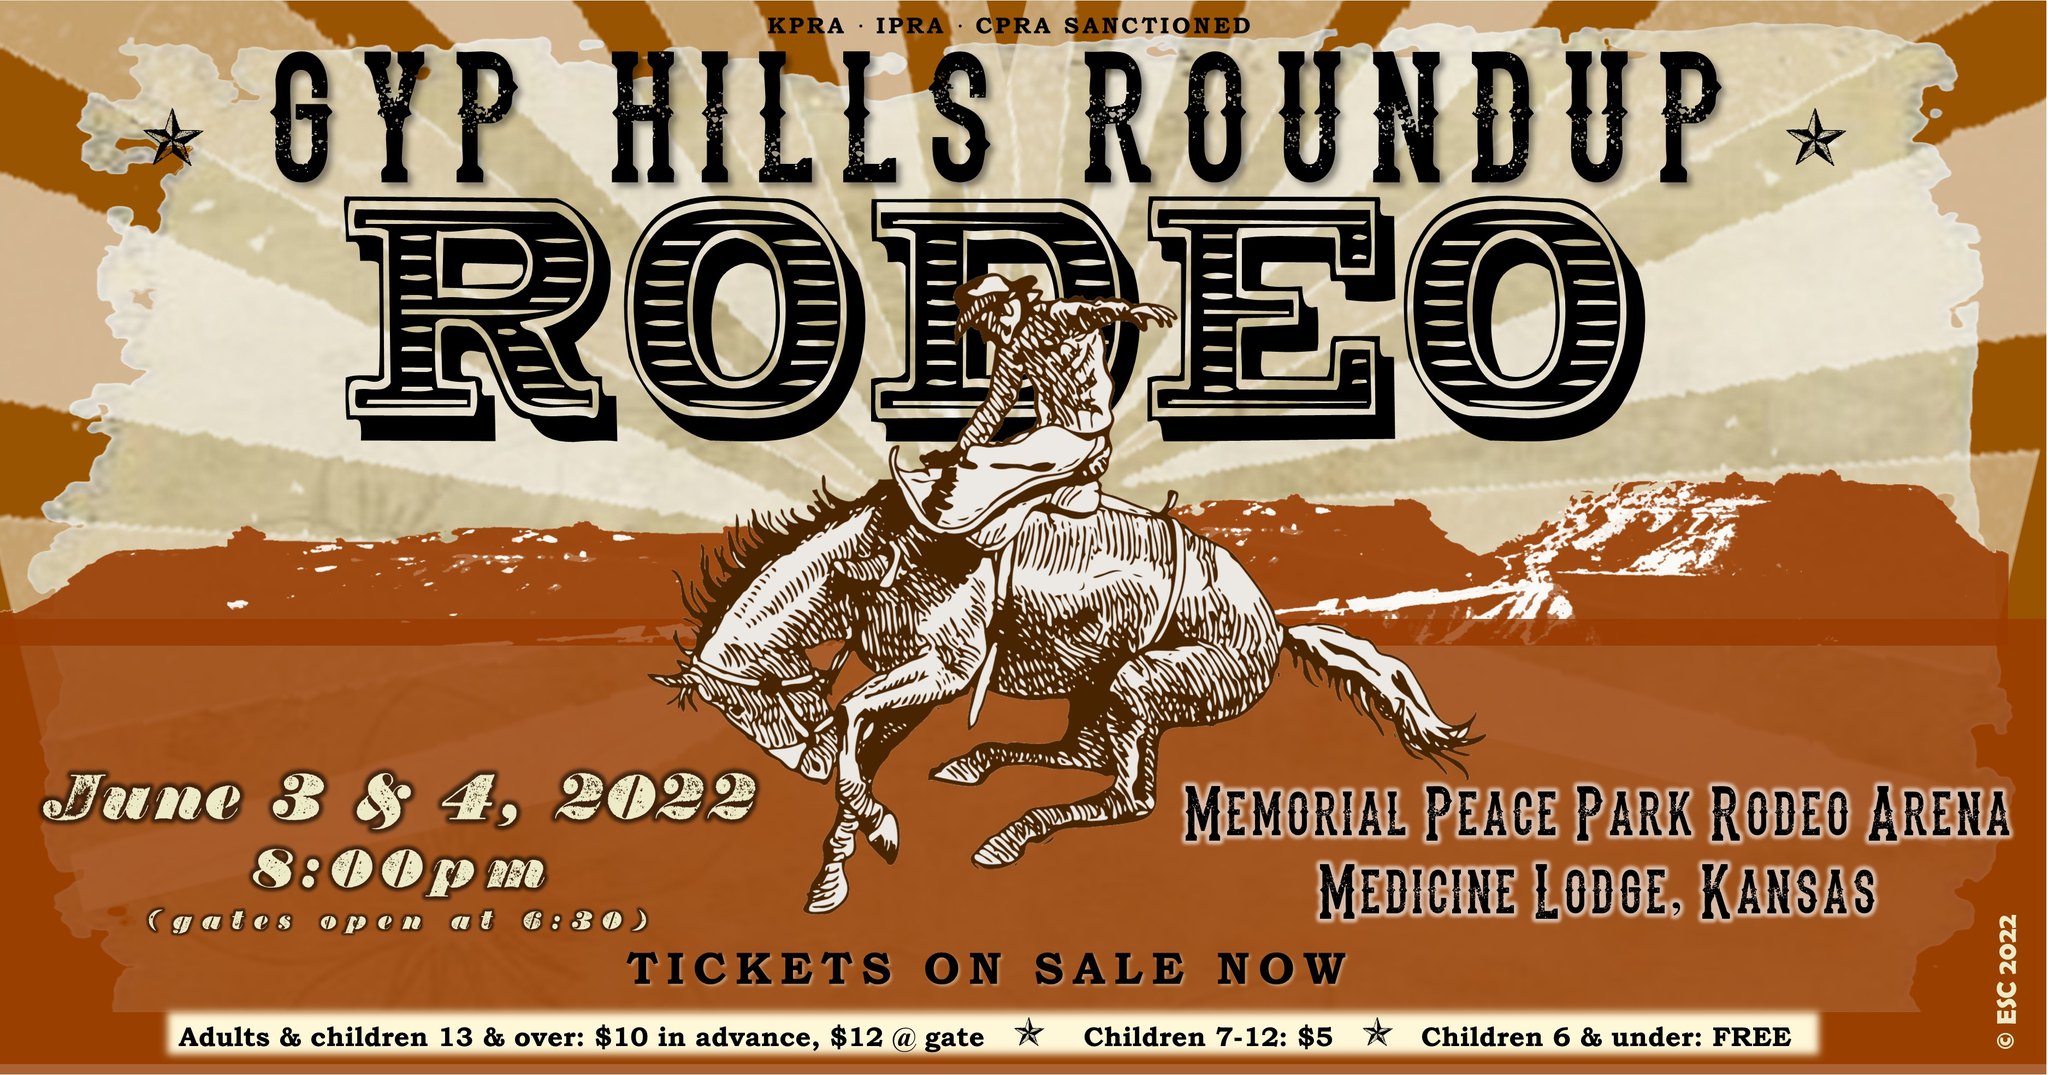 Gyp Hills Roundup Rodeo header